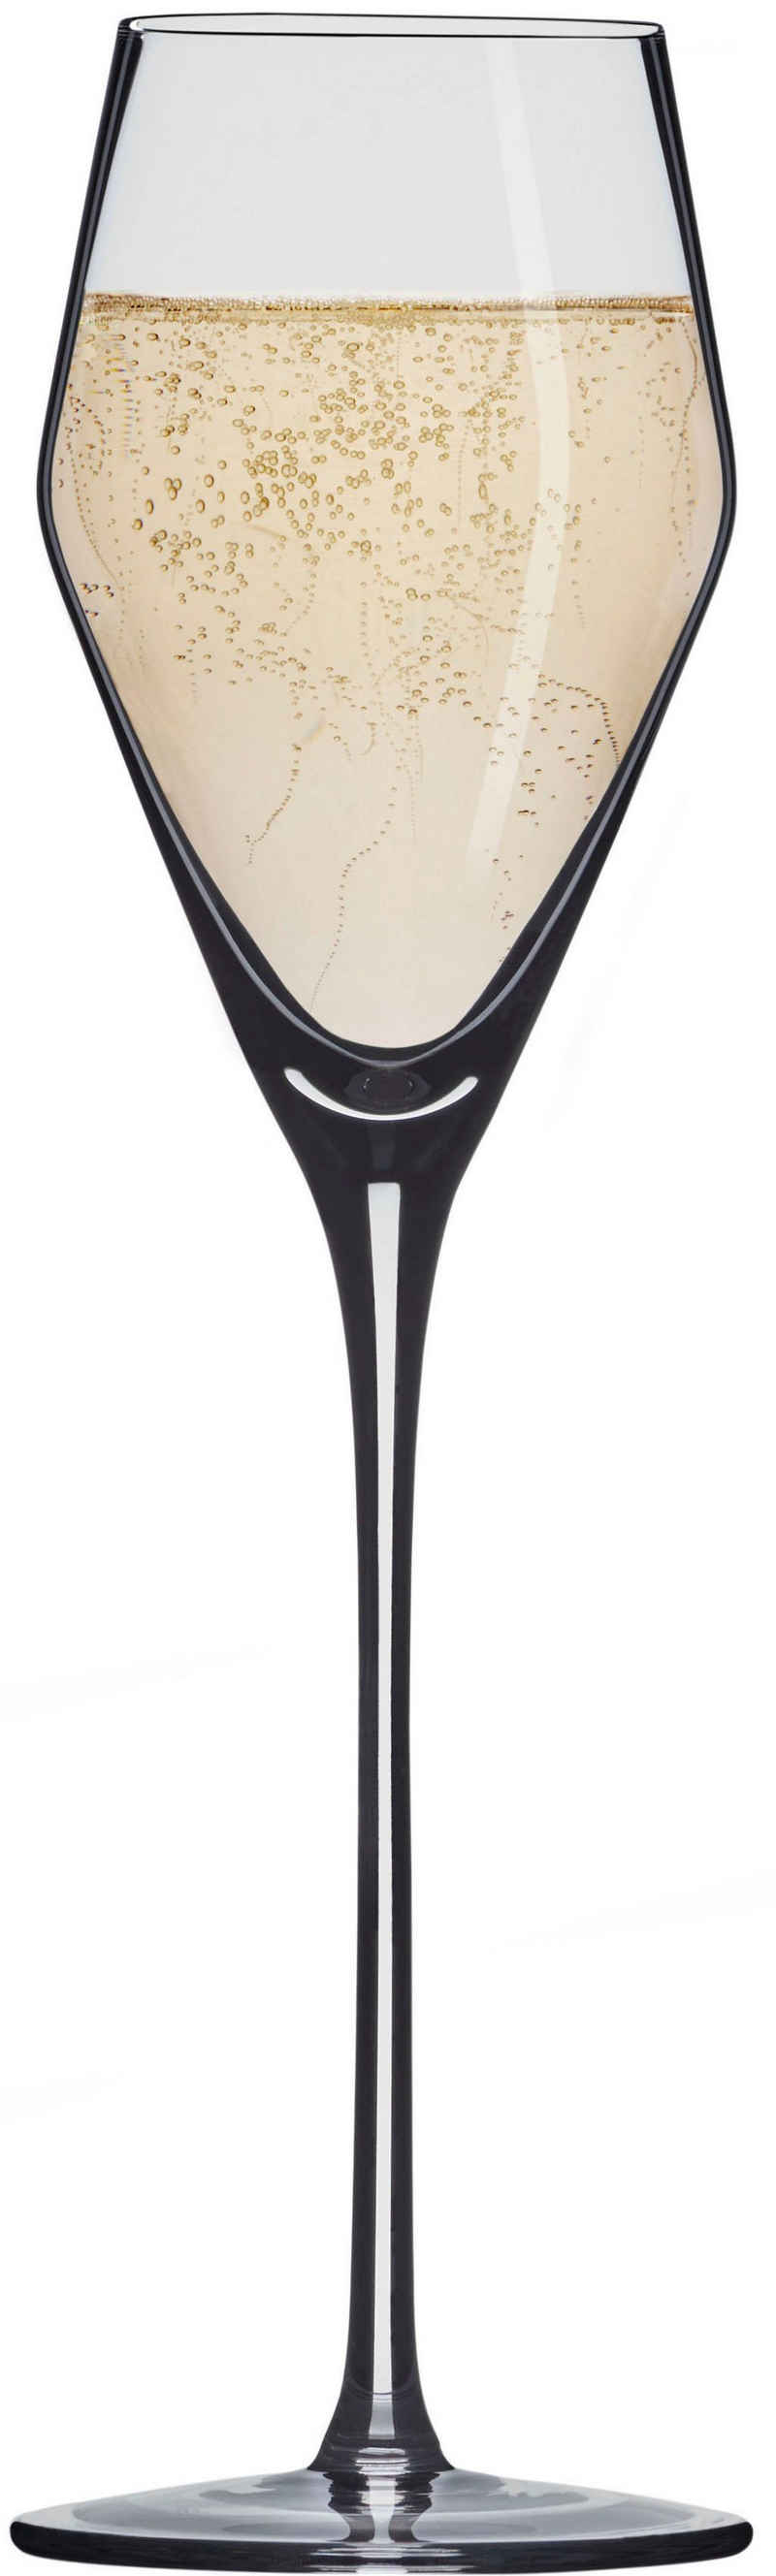 SABATIER International Champagnerglas, Kristallglas, mundgeblasen, 200 ml, 2er Set